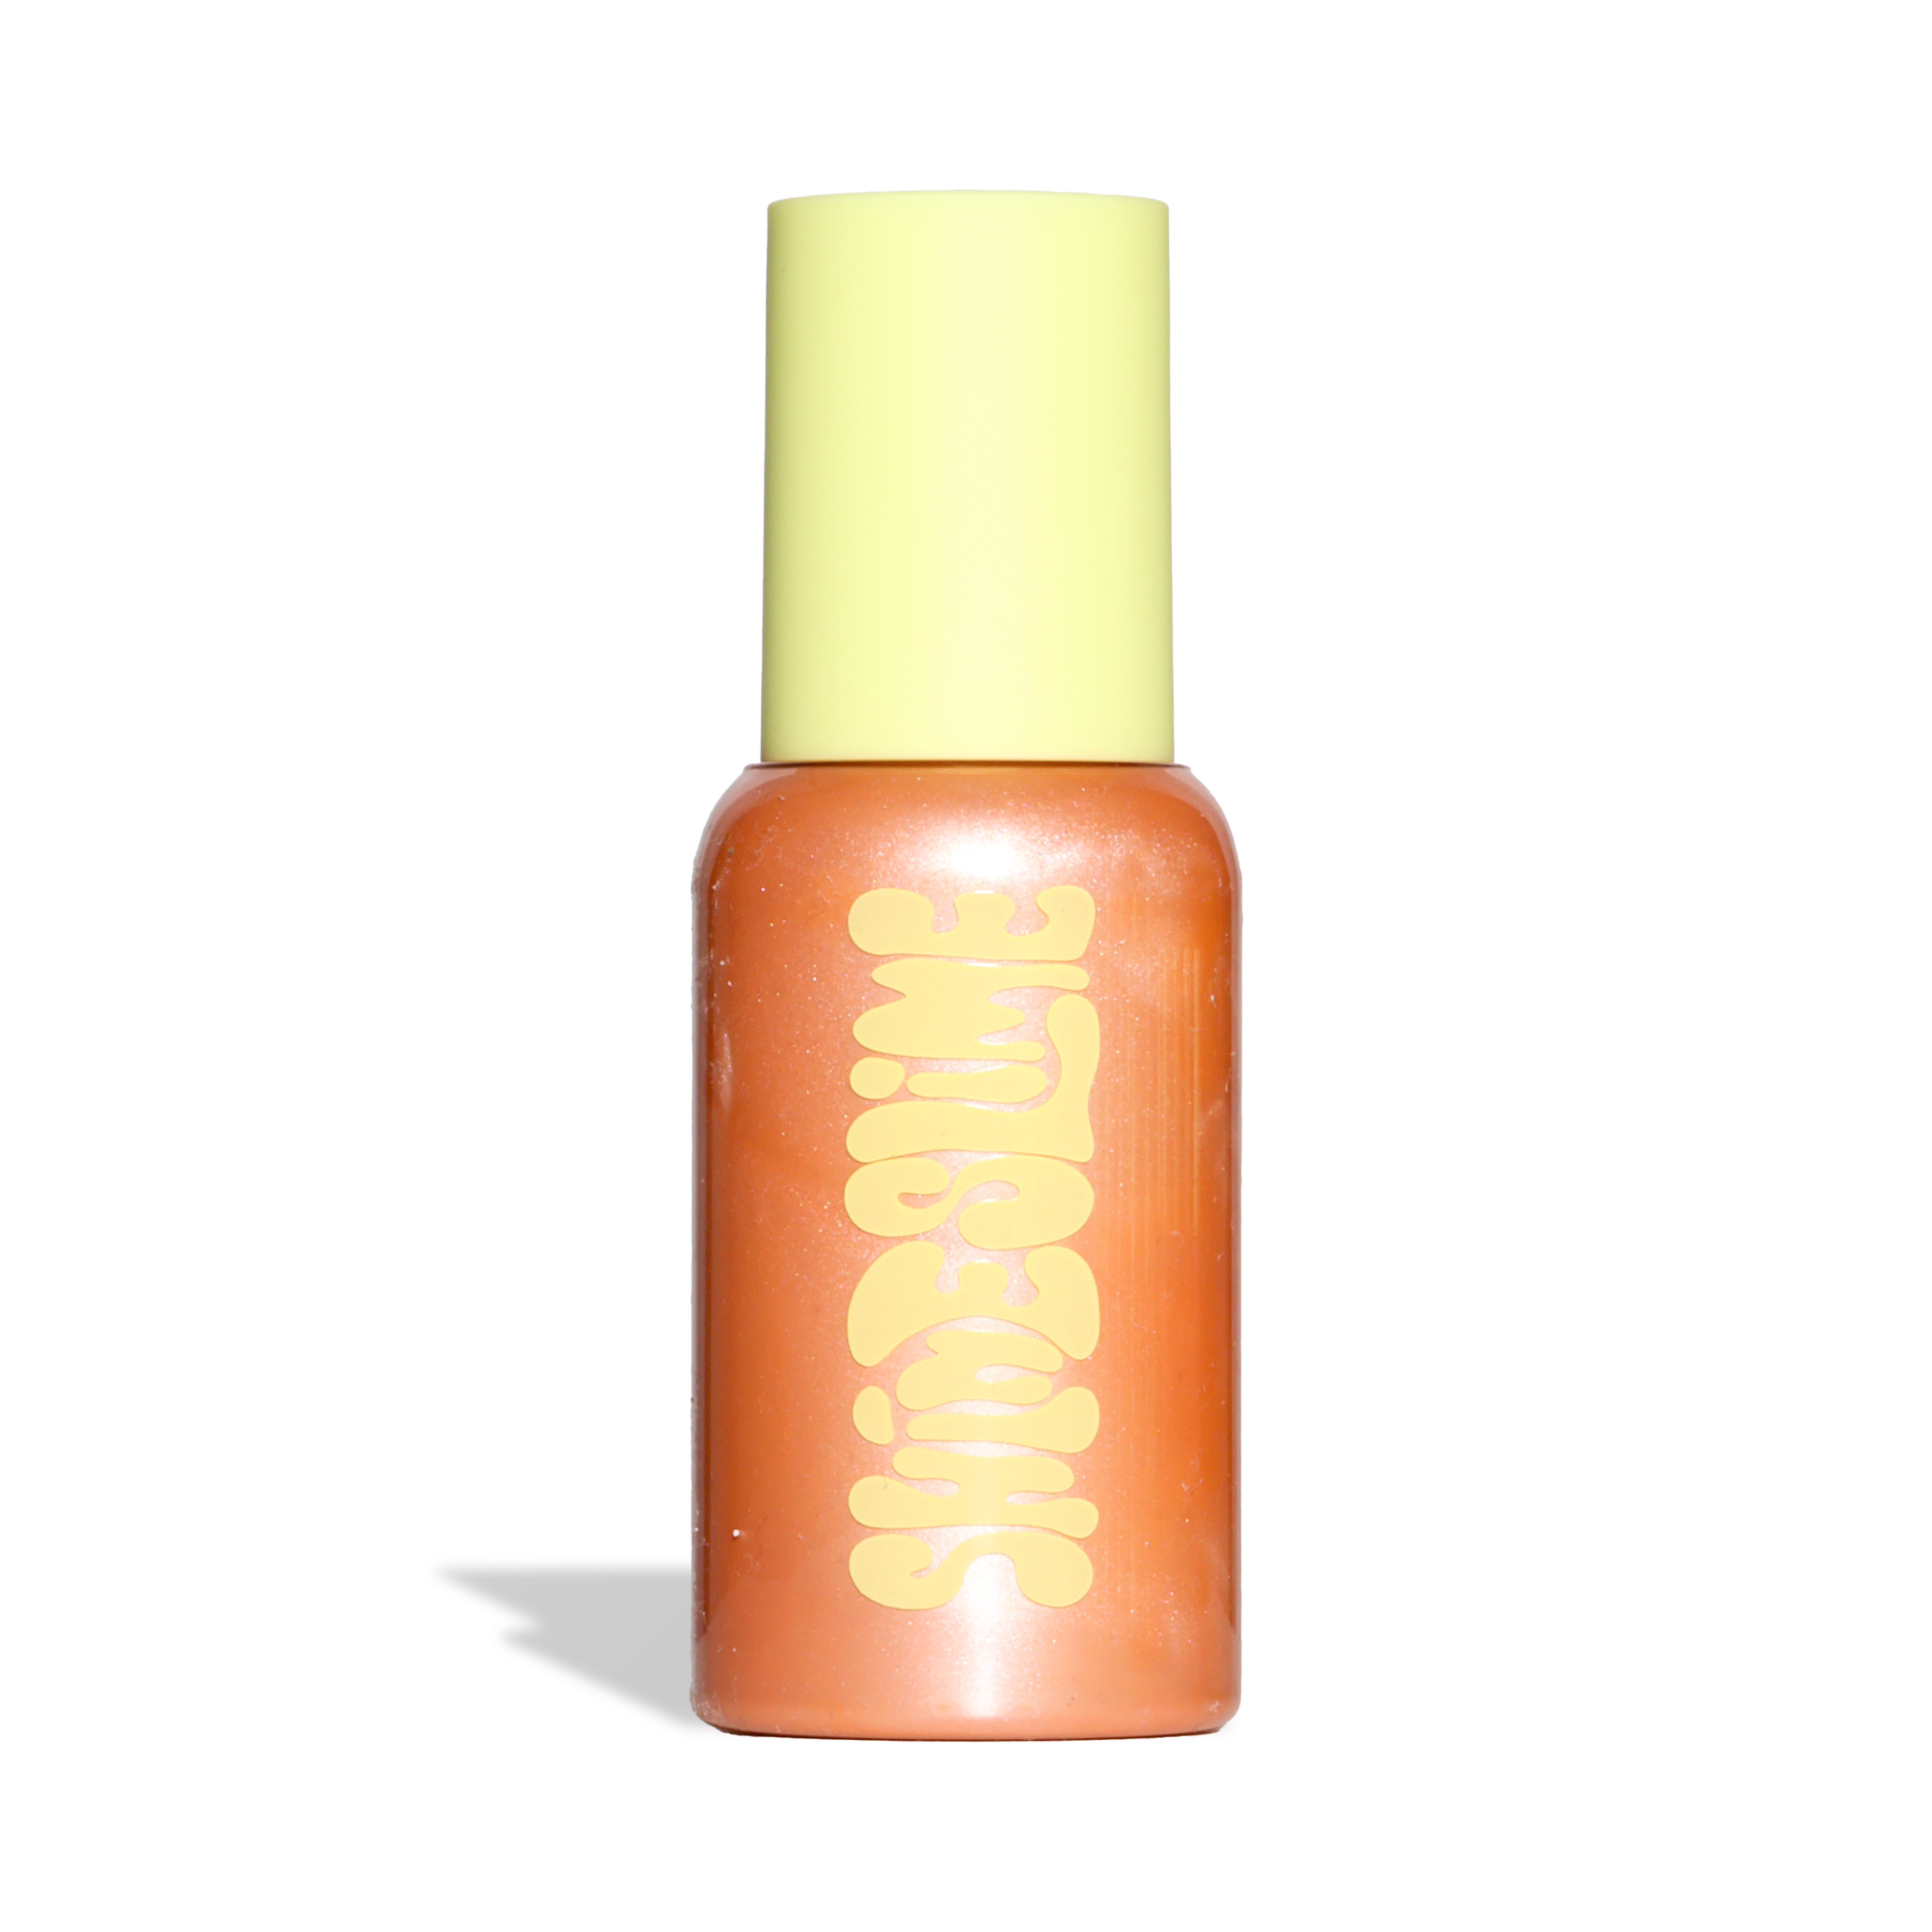 Shine Slime Body Glow - Liquid Body Bronzer and Body Highlighter